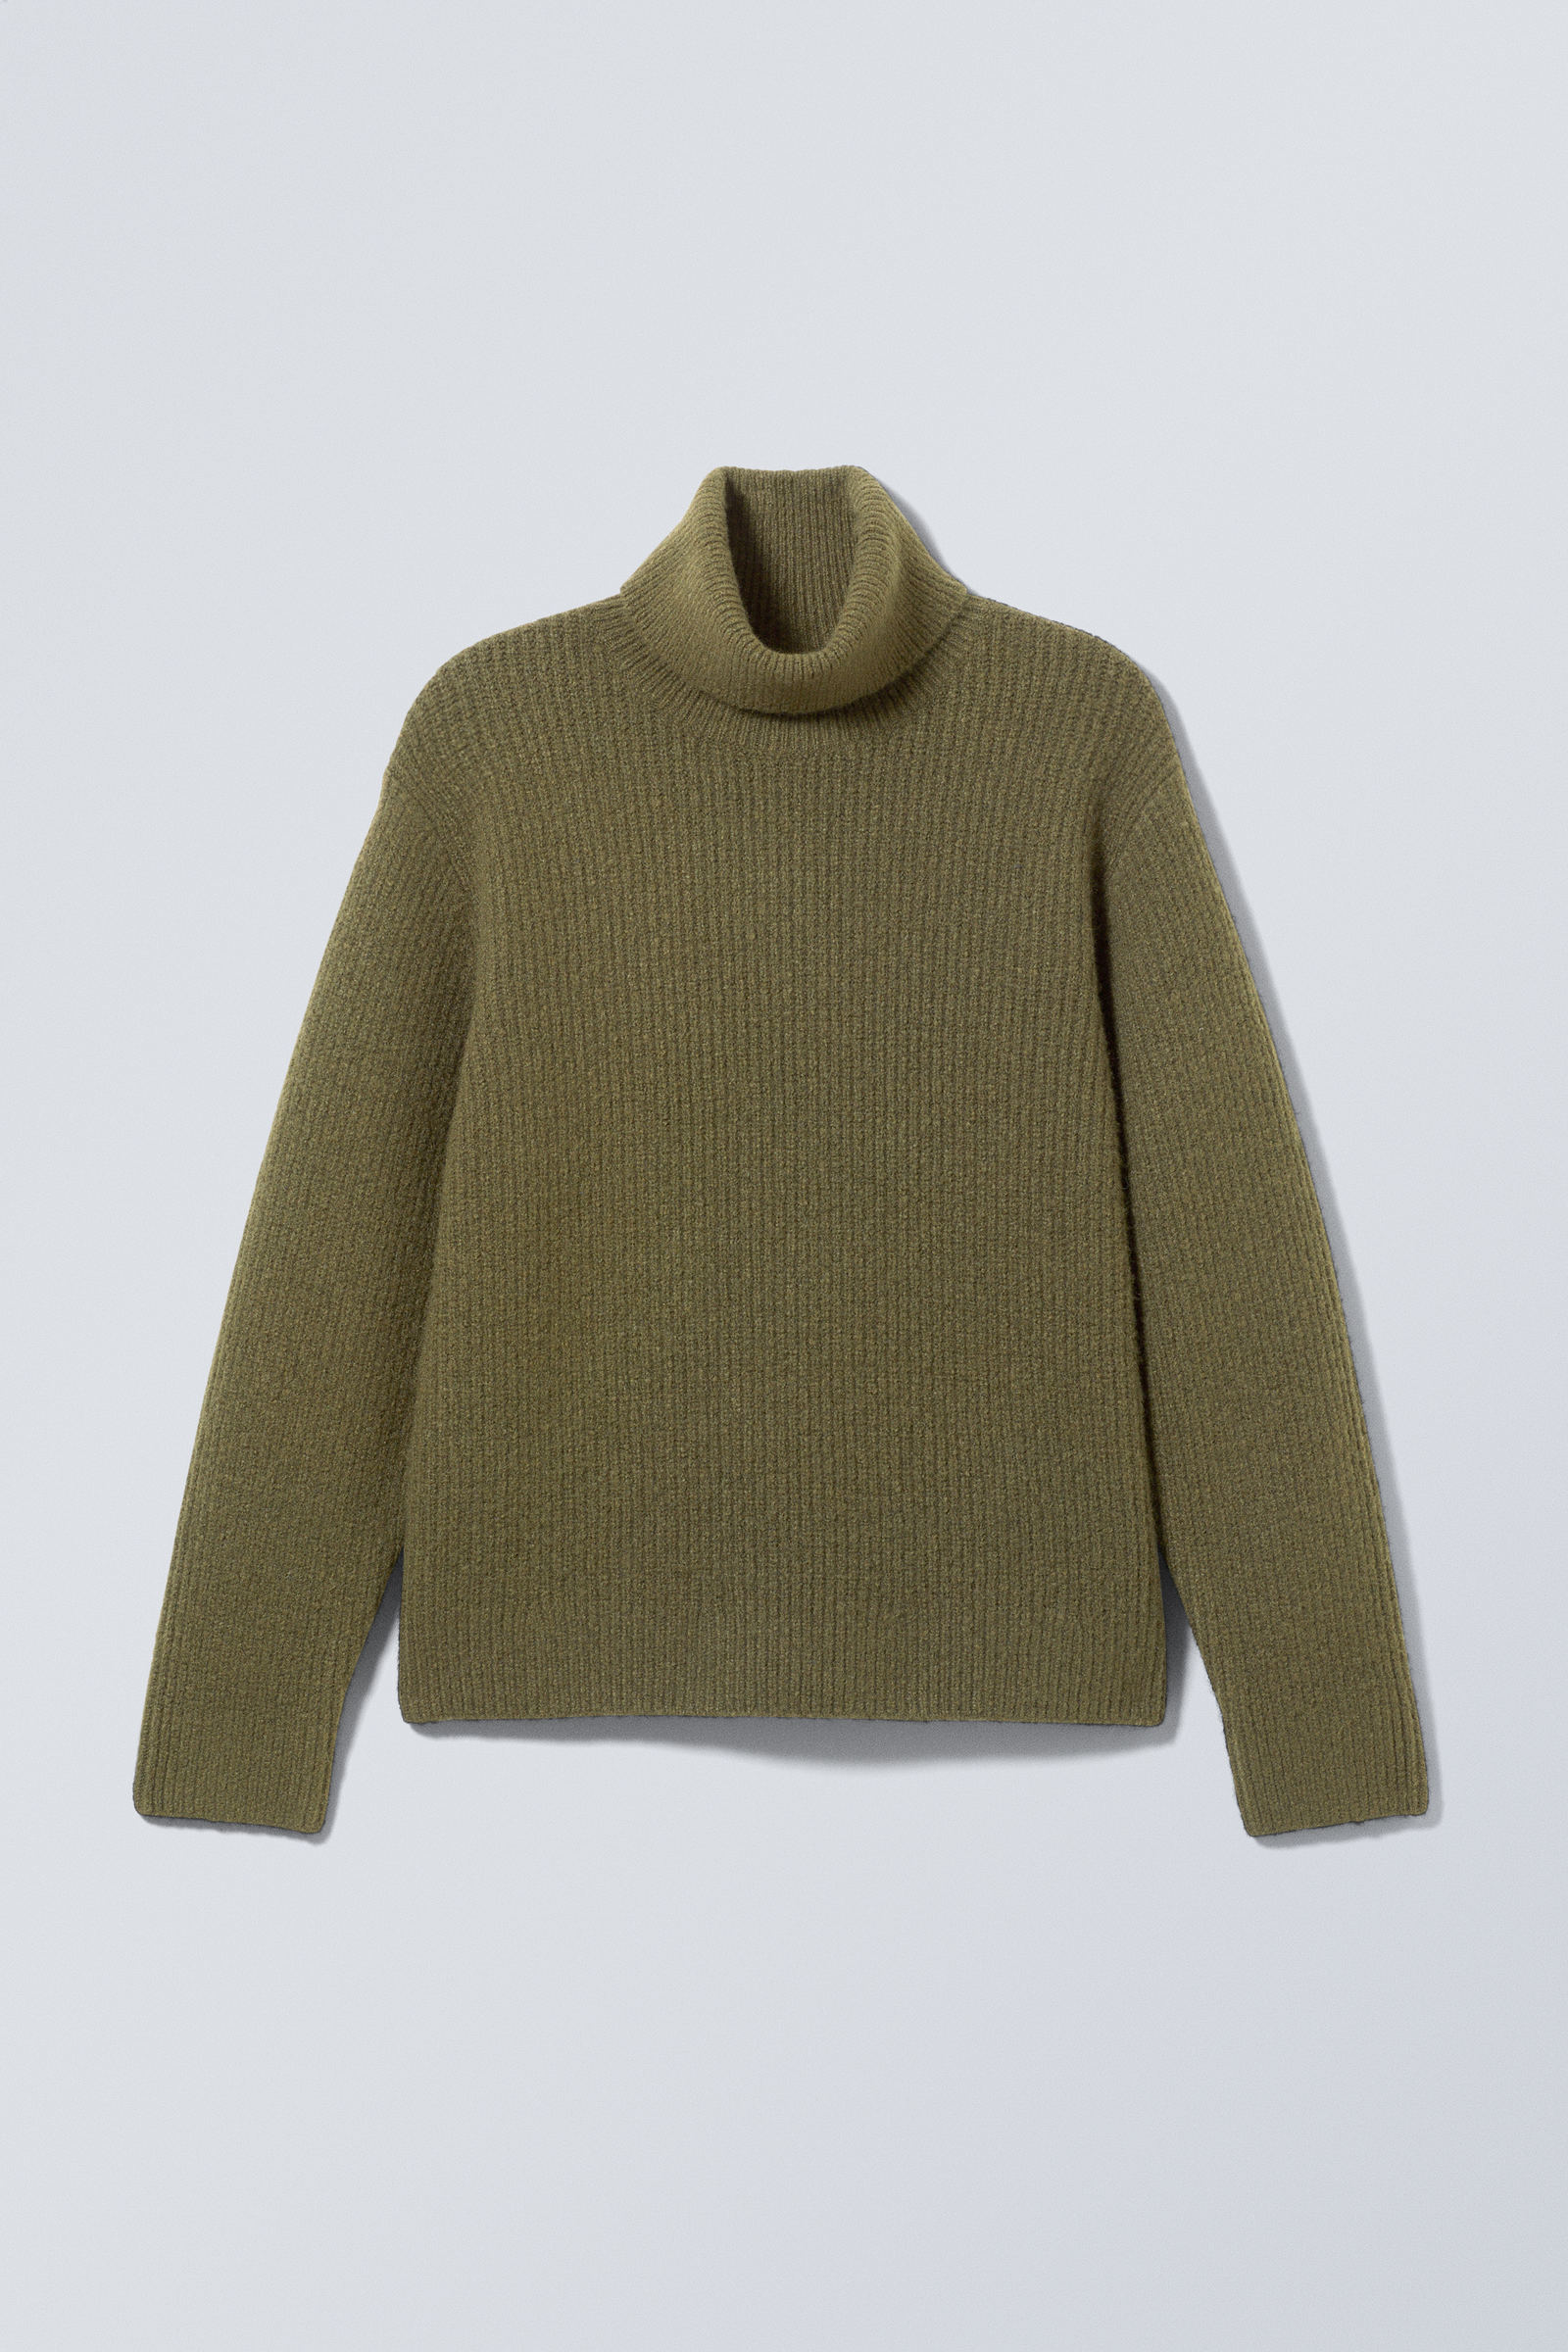 Khaki Green - Renzo Relaxed Wool Blend Turtleneck - 1